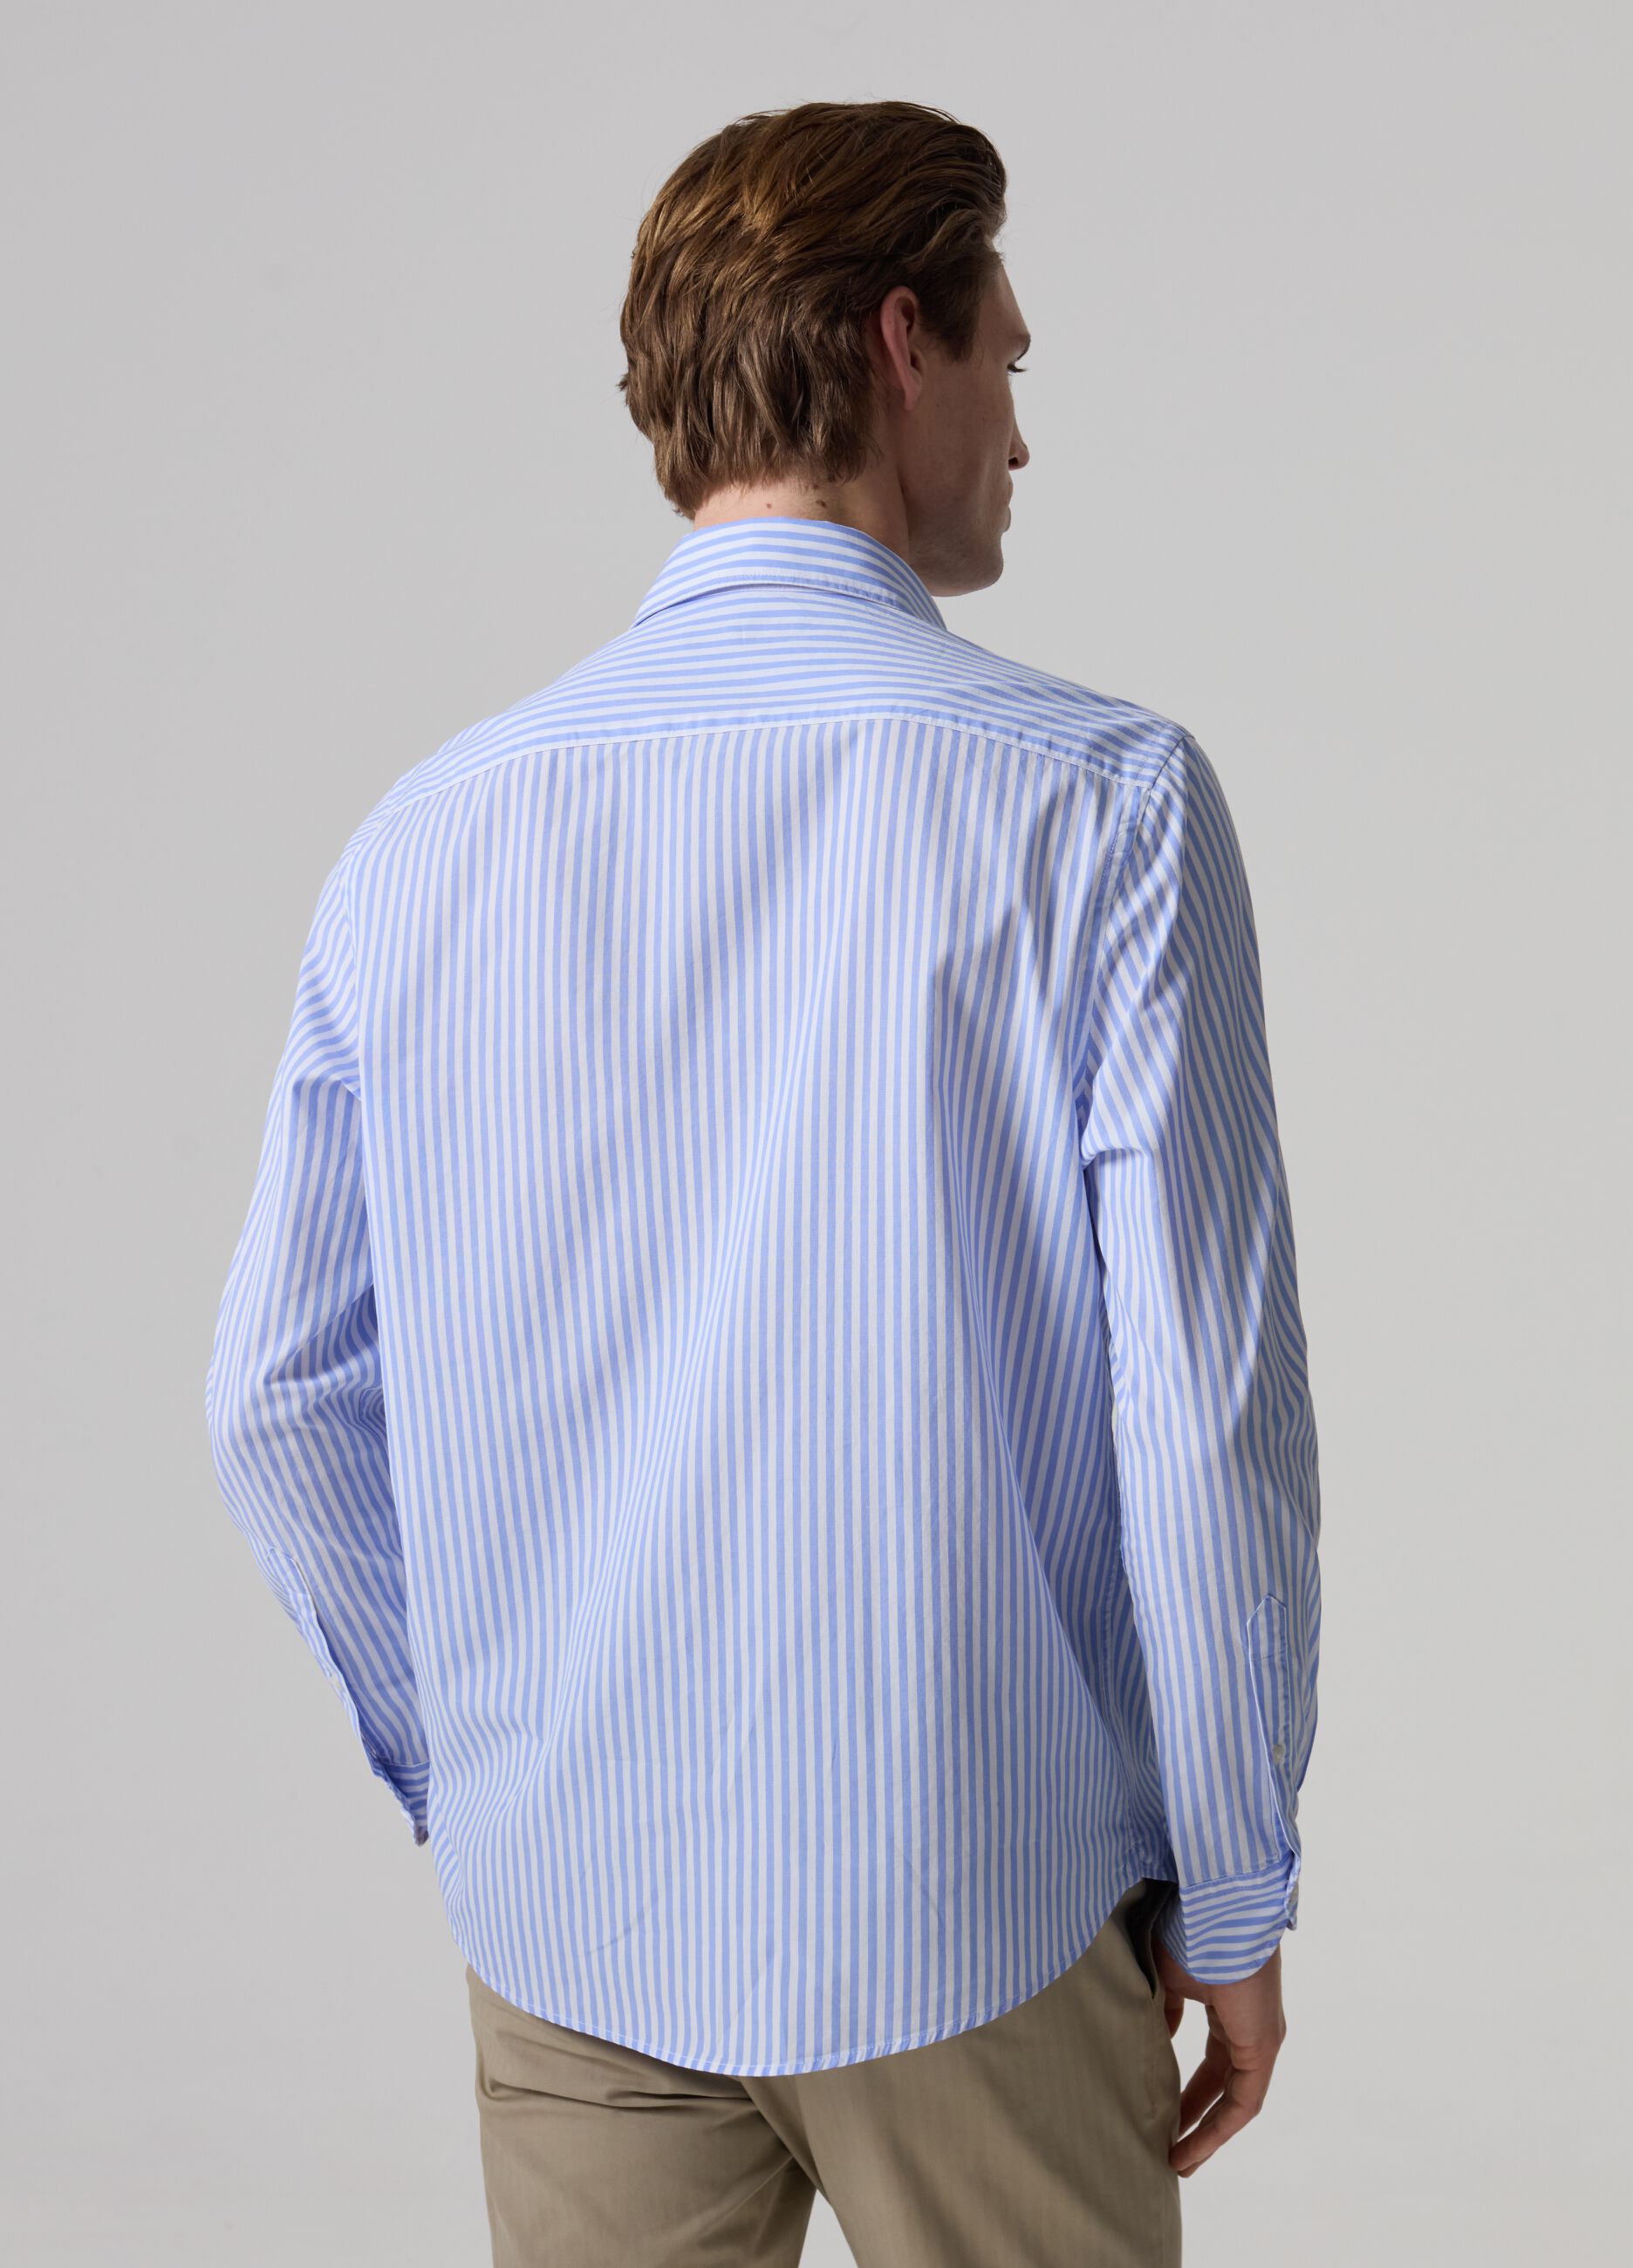 Italian Men's Shirts: Long and Short Sleeve